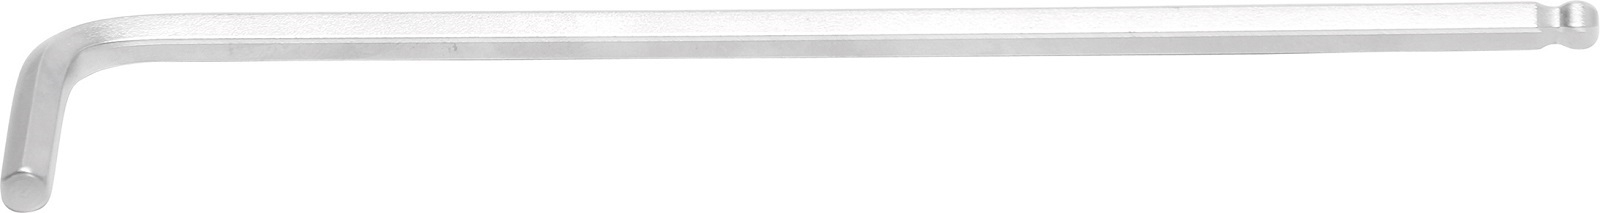 Winkelschlüssel | extra lang | Innensechskant/Innensechskant mit Kugelkopf 5 mm - BGS 790-5